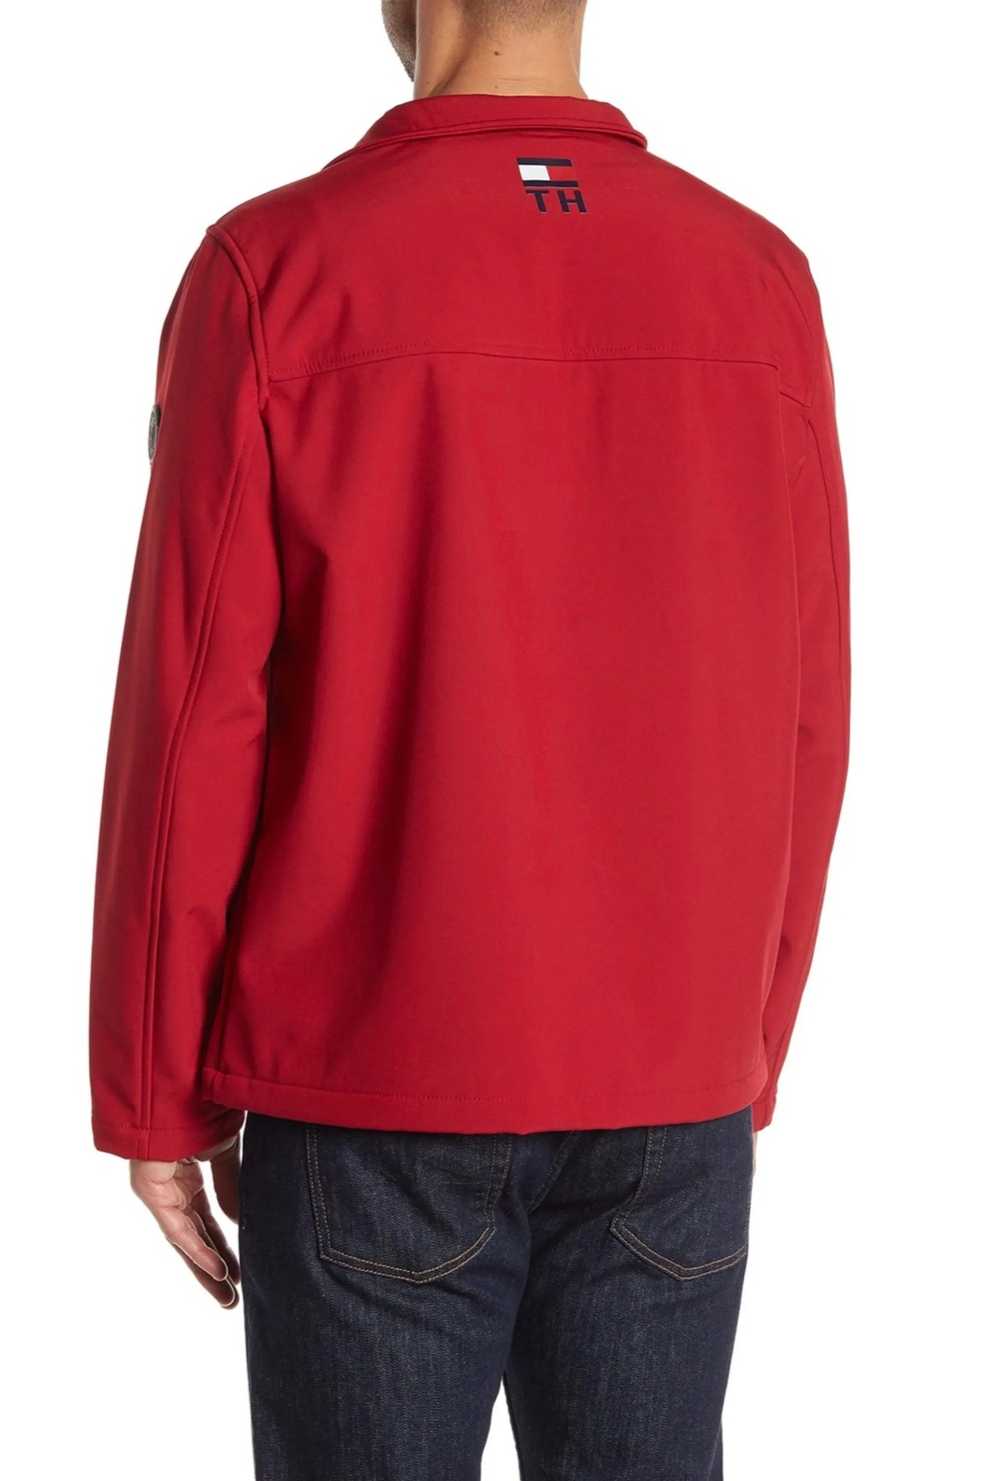 Tommy Hilfiger Colorblock Zip Front Jacket - image 2